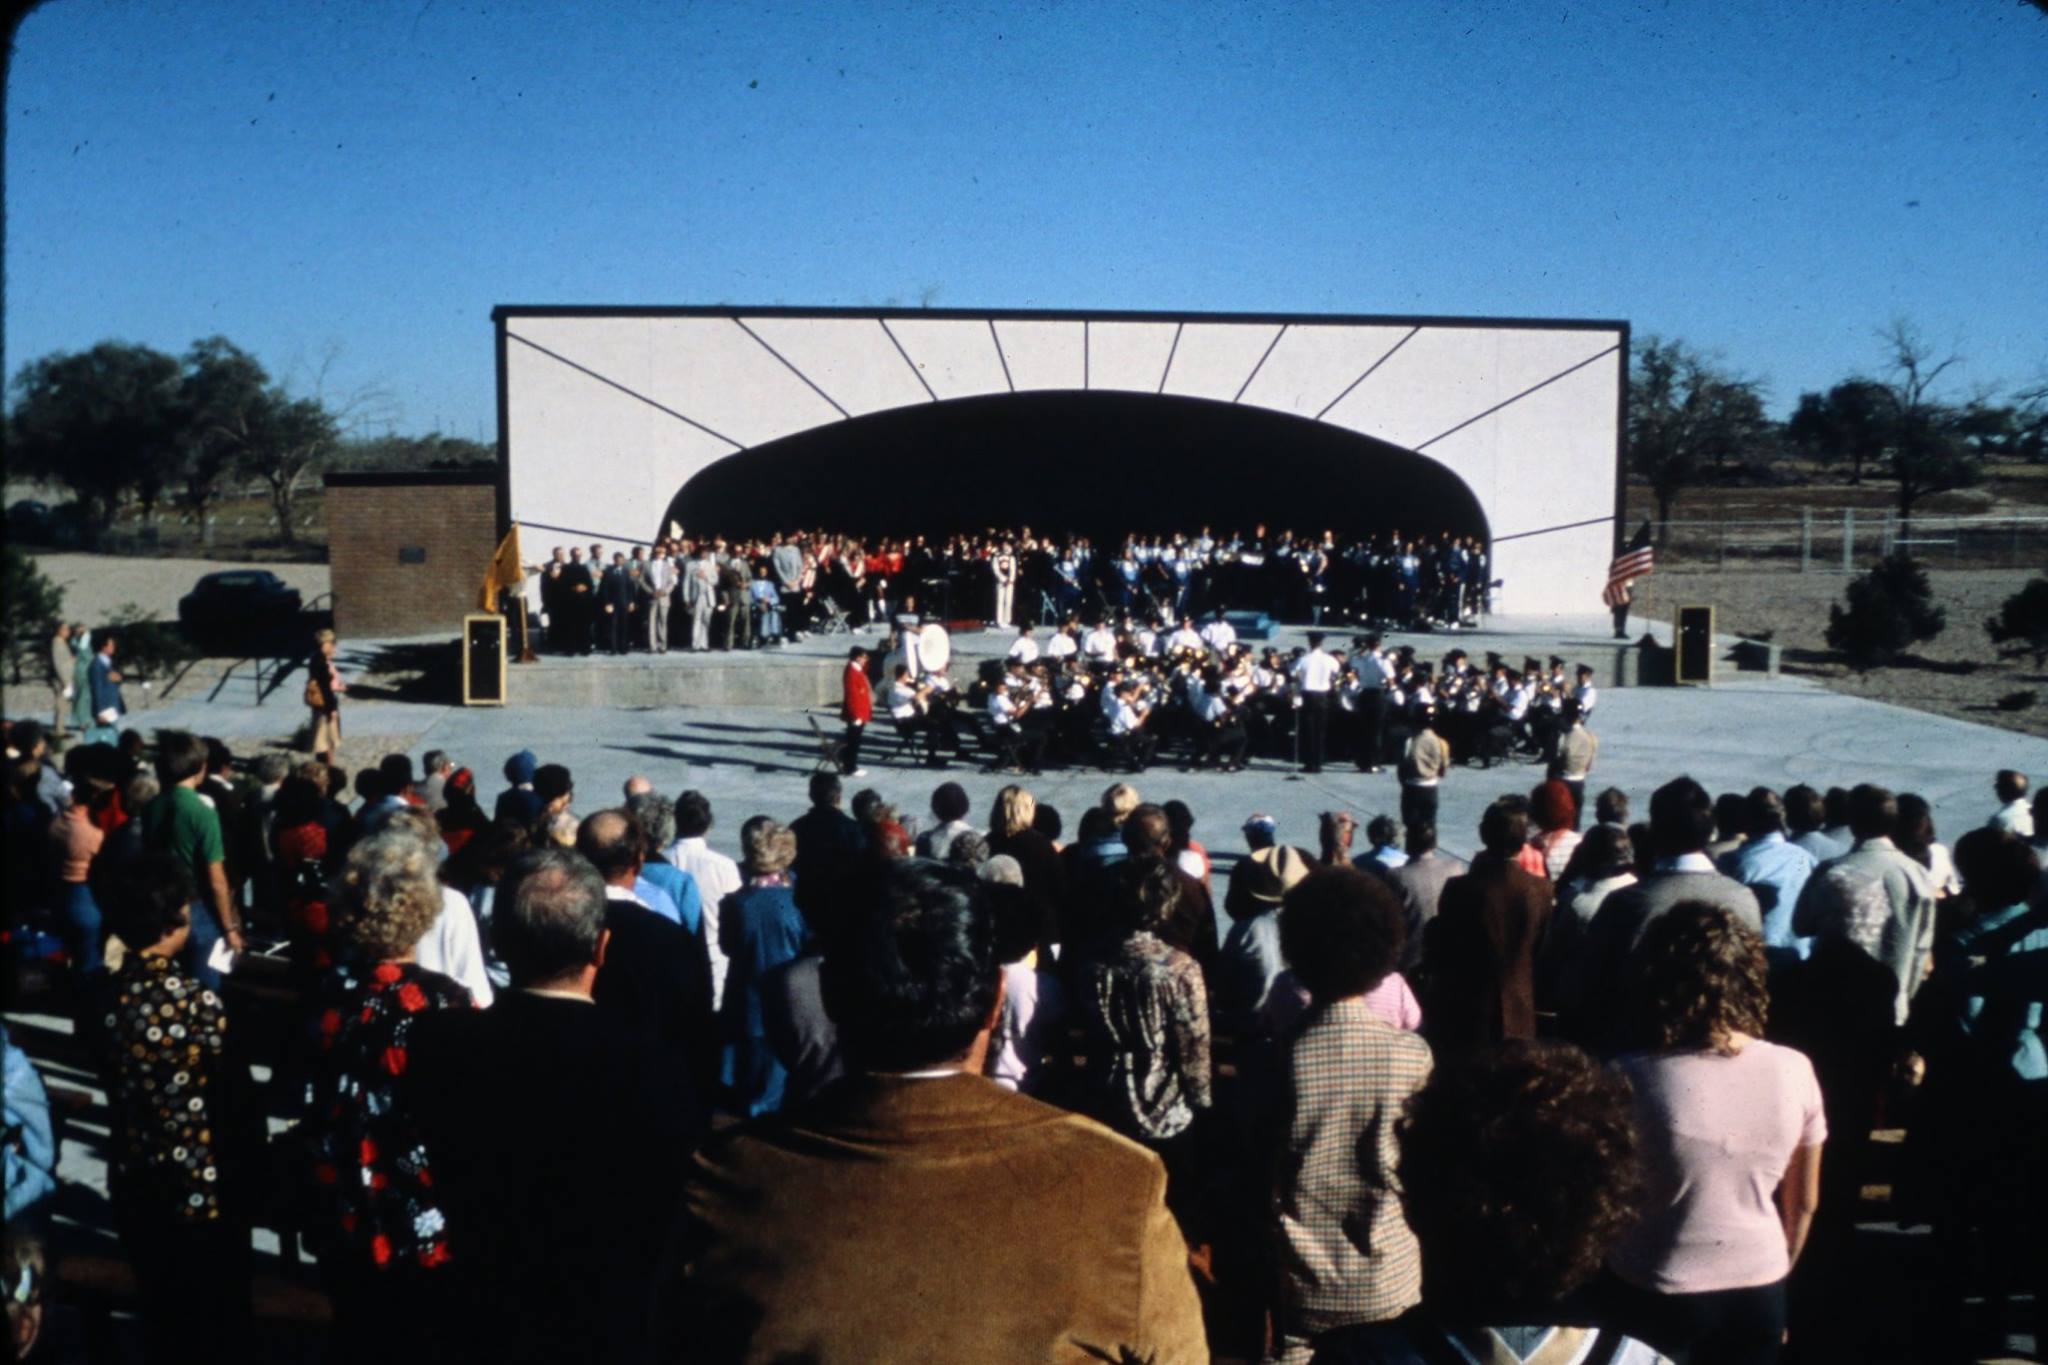 NMMI amptheater in 1980s's image